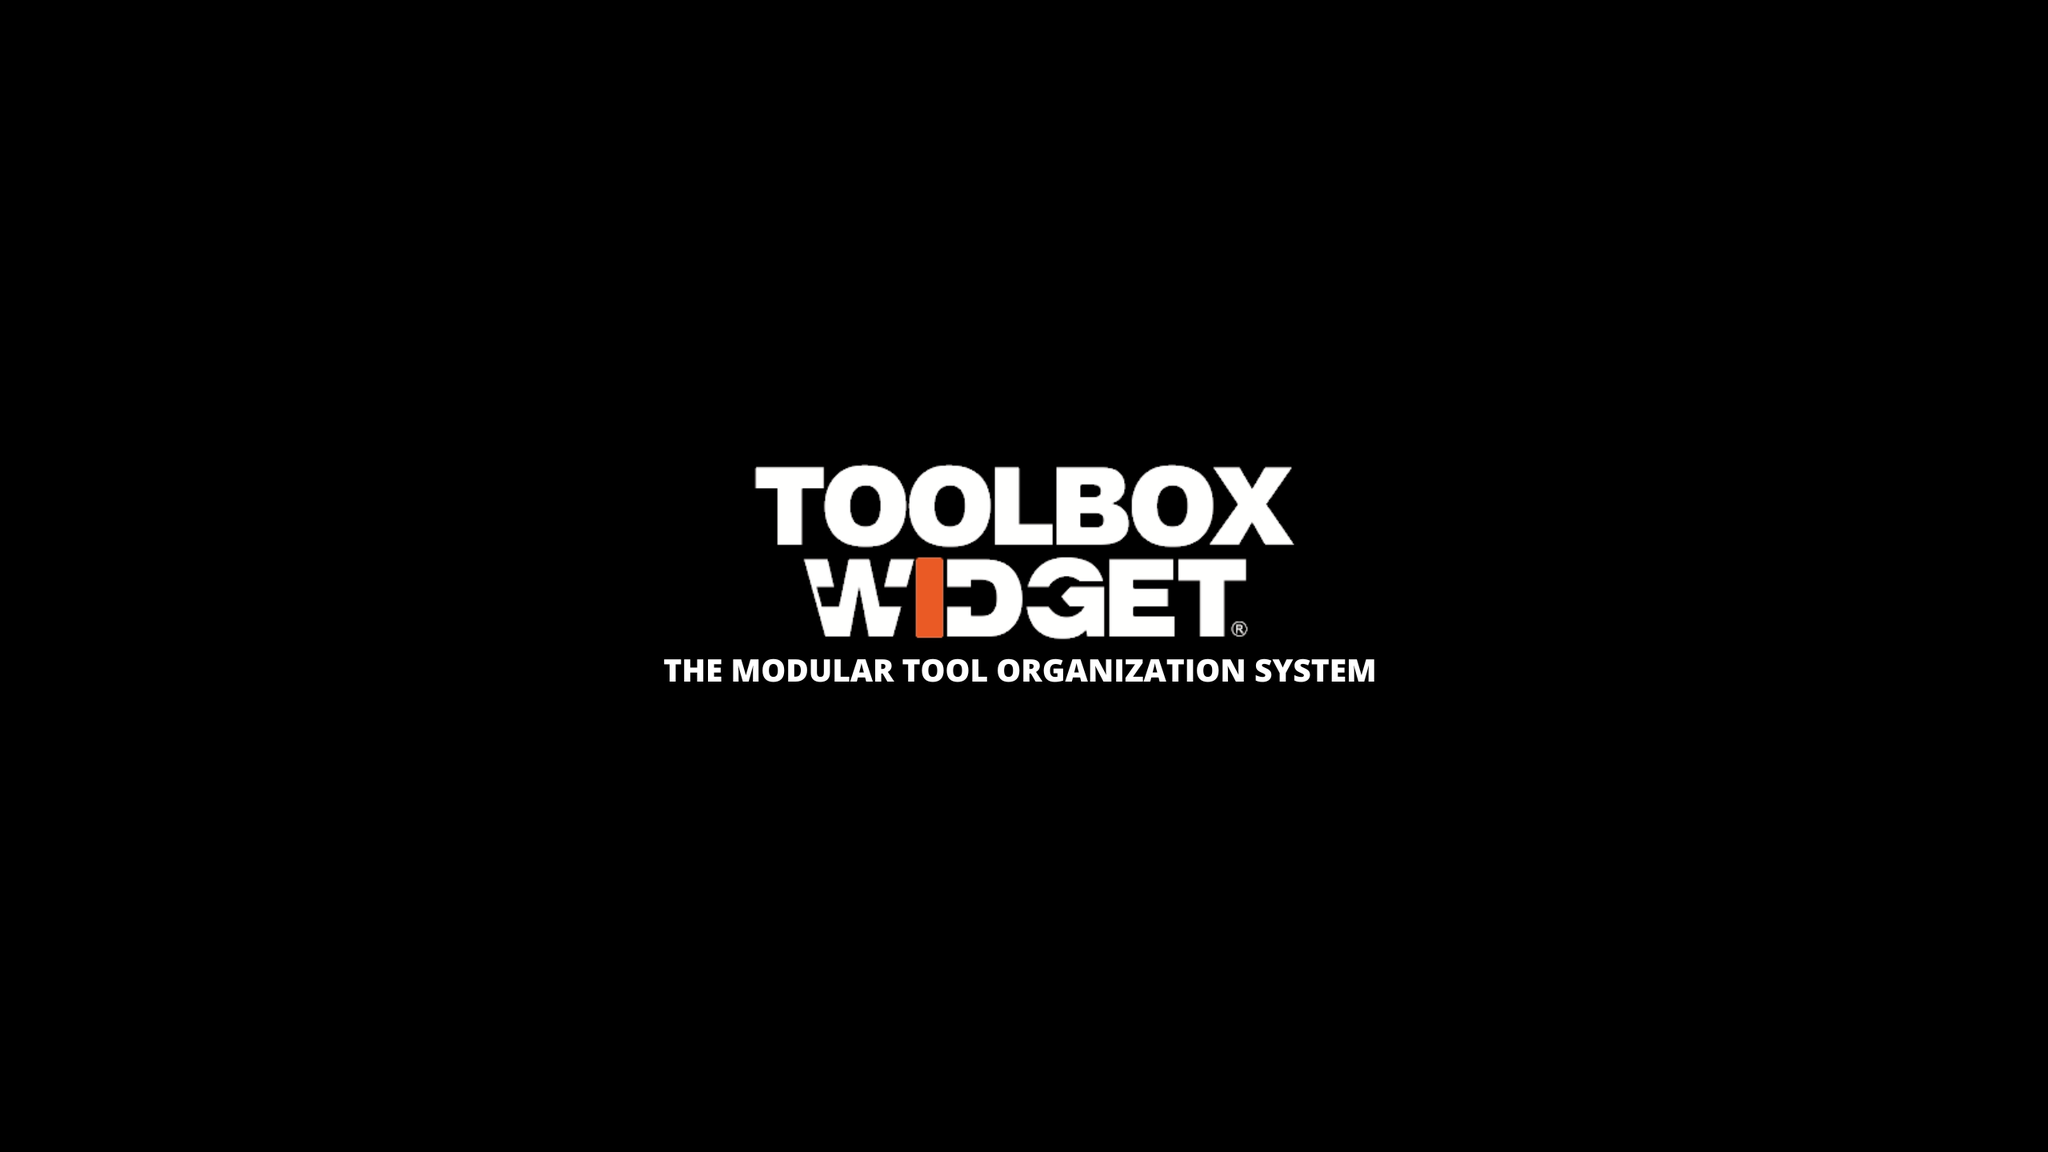 ToolBox Widget